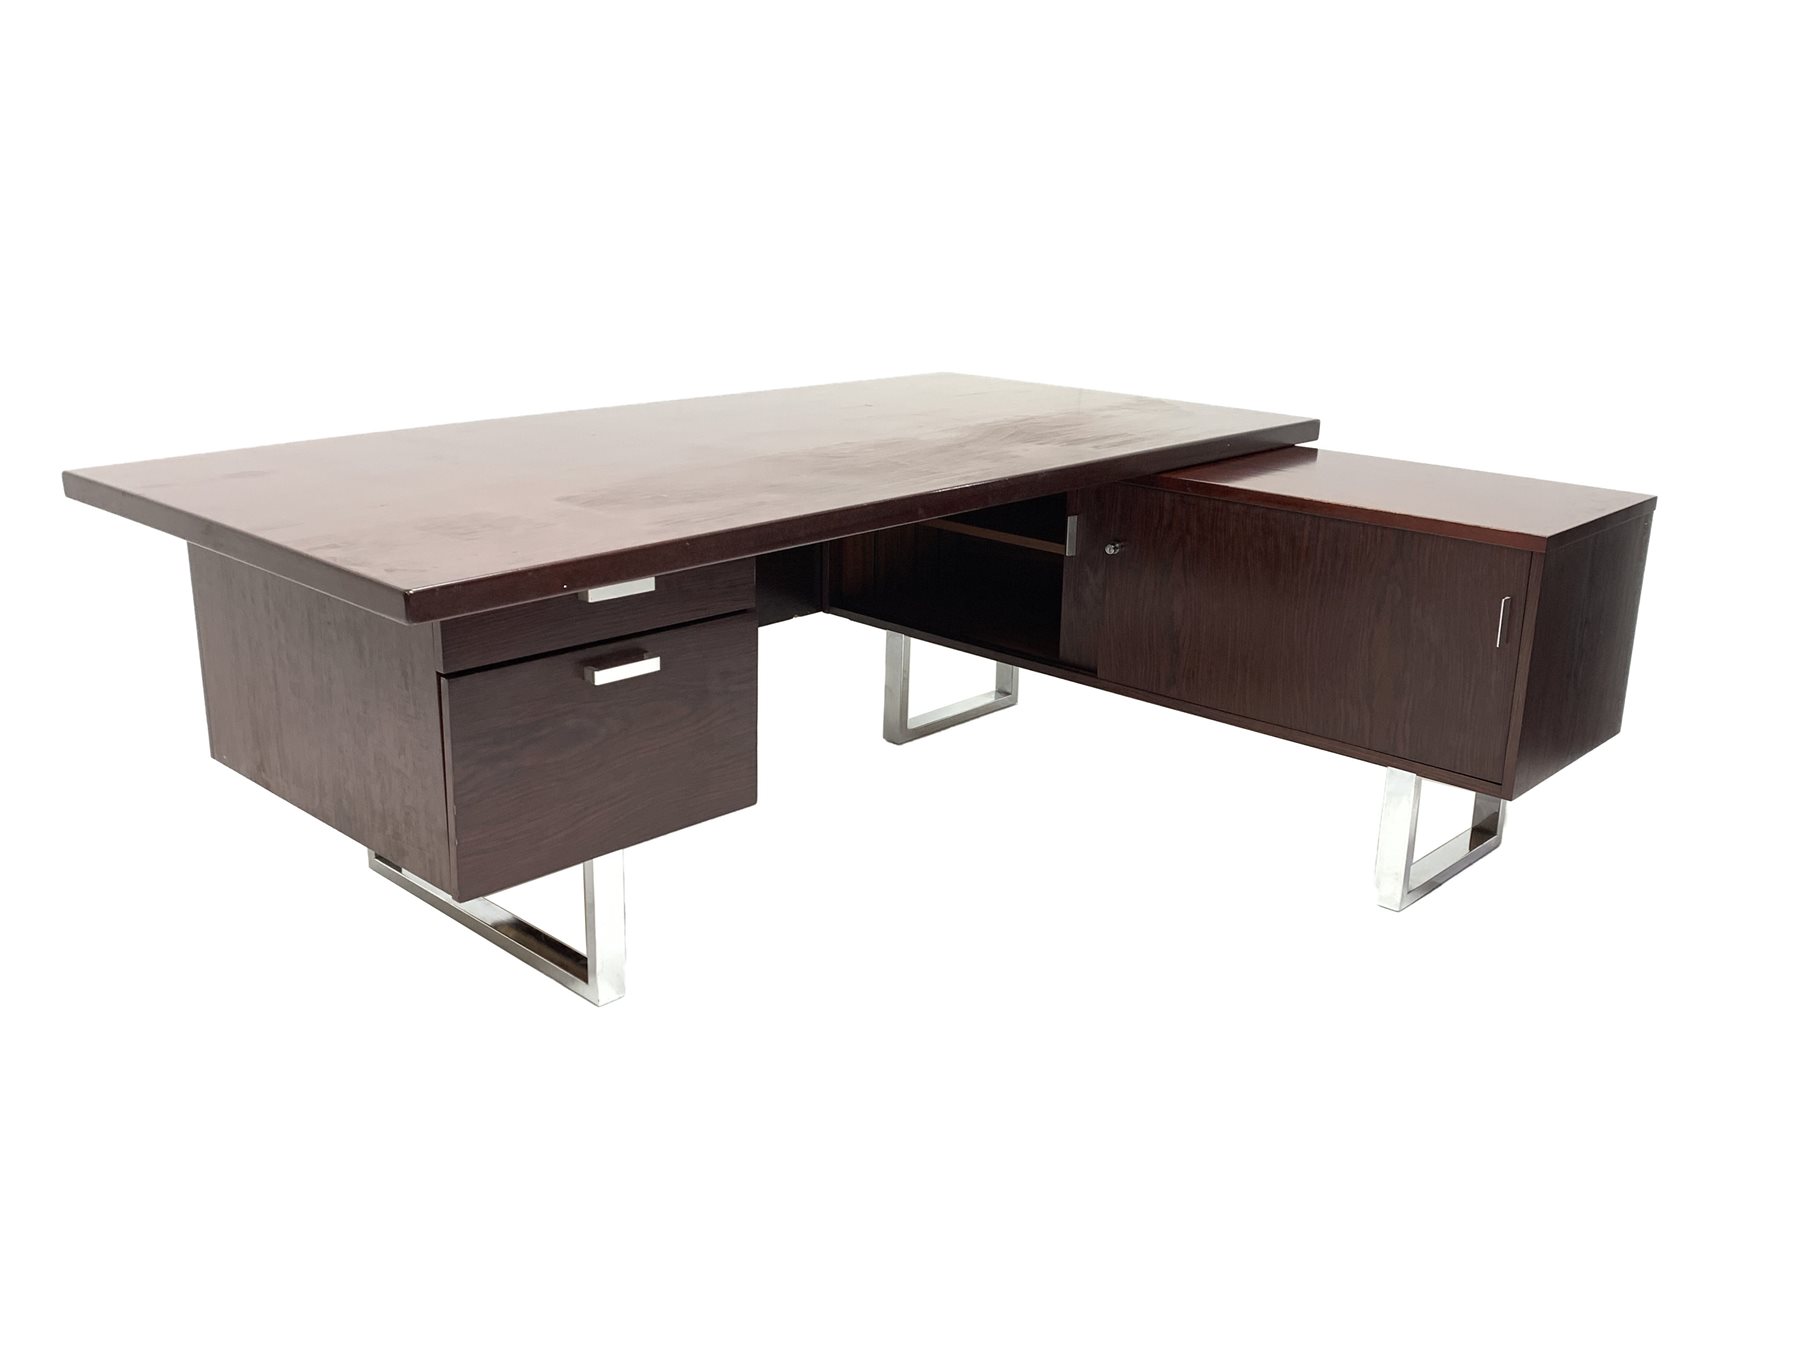 Prestige Range by Trevor Chinn for Gordon Russell - Mid century dark wood Executive desk, with pedes